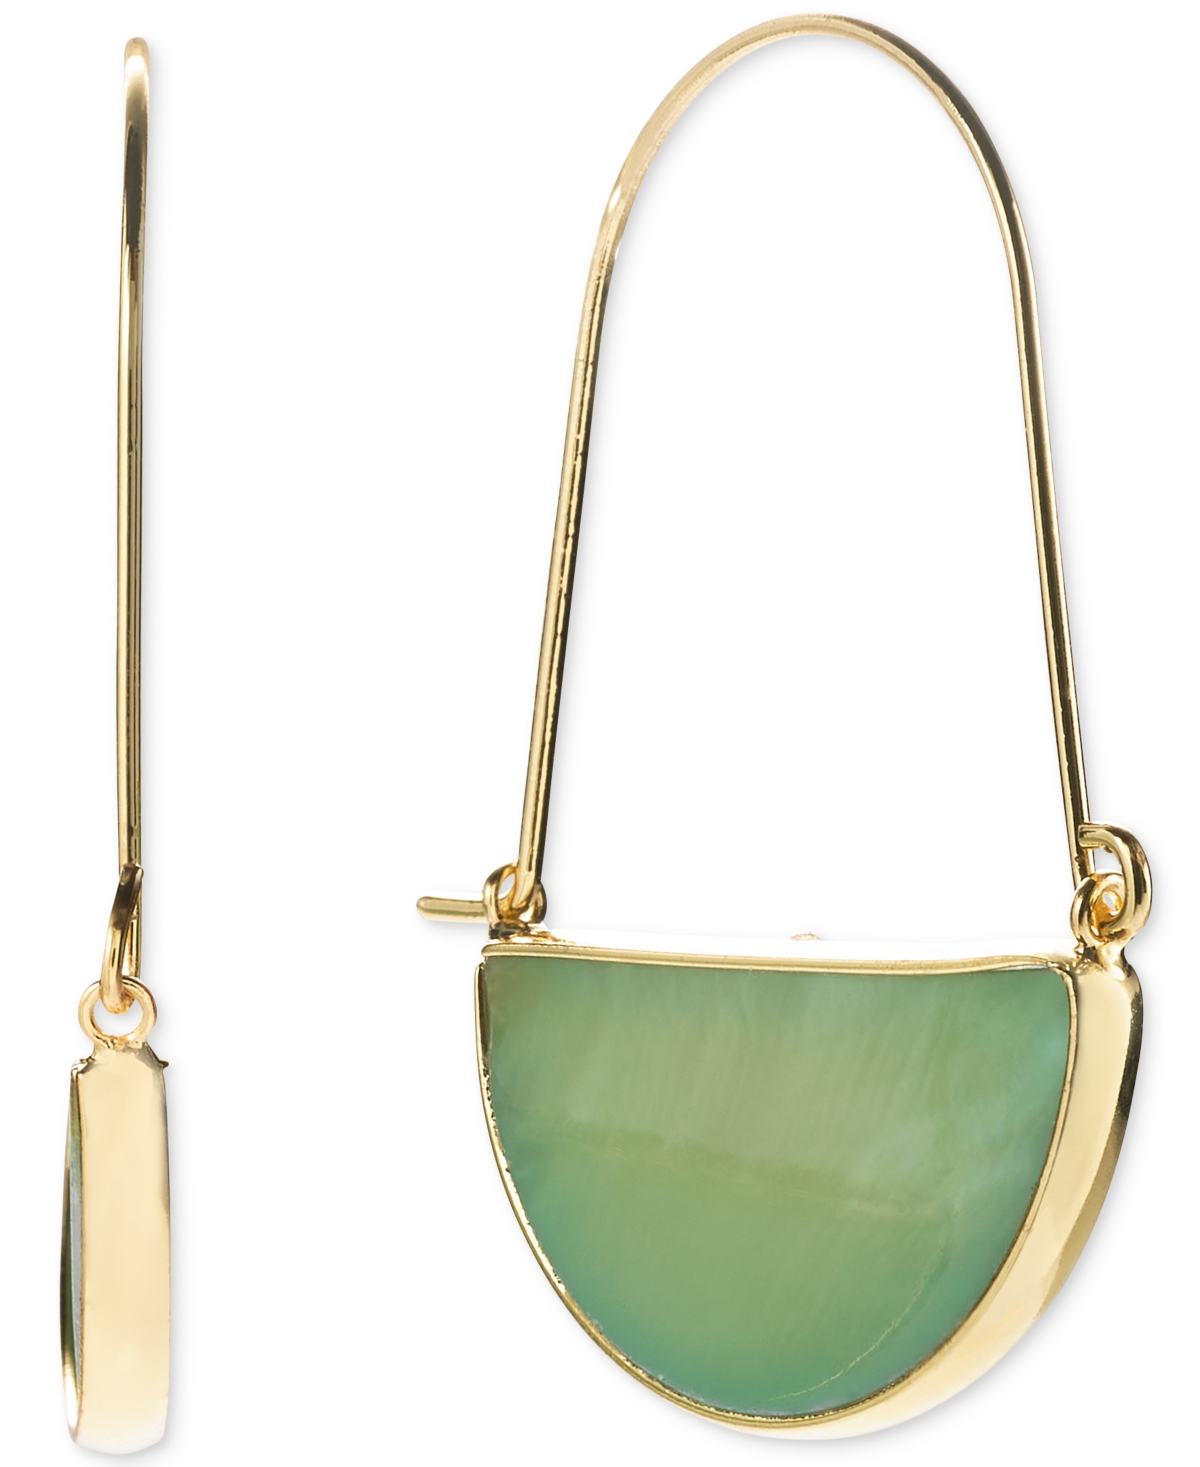 Gold-Tone Half Circle Stone Earrings, Created for Macy's - White